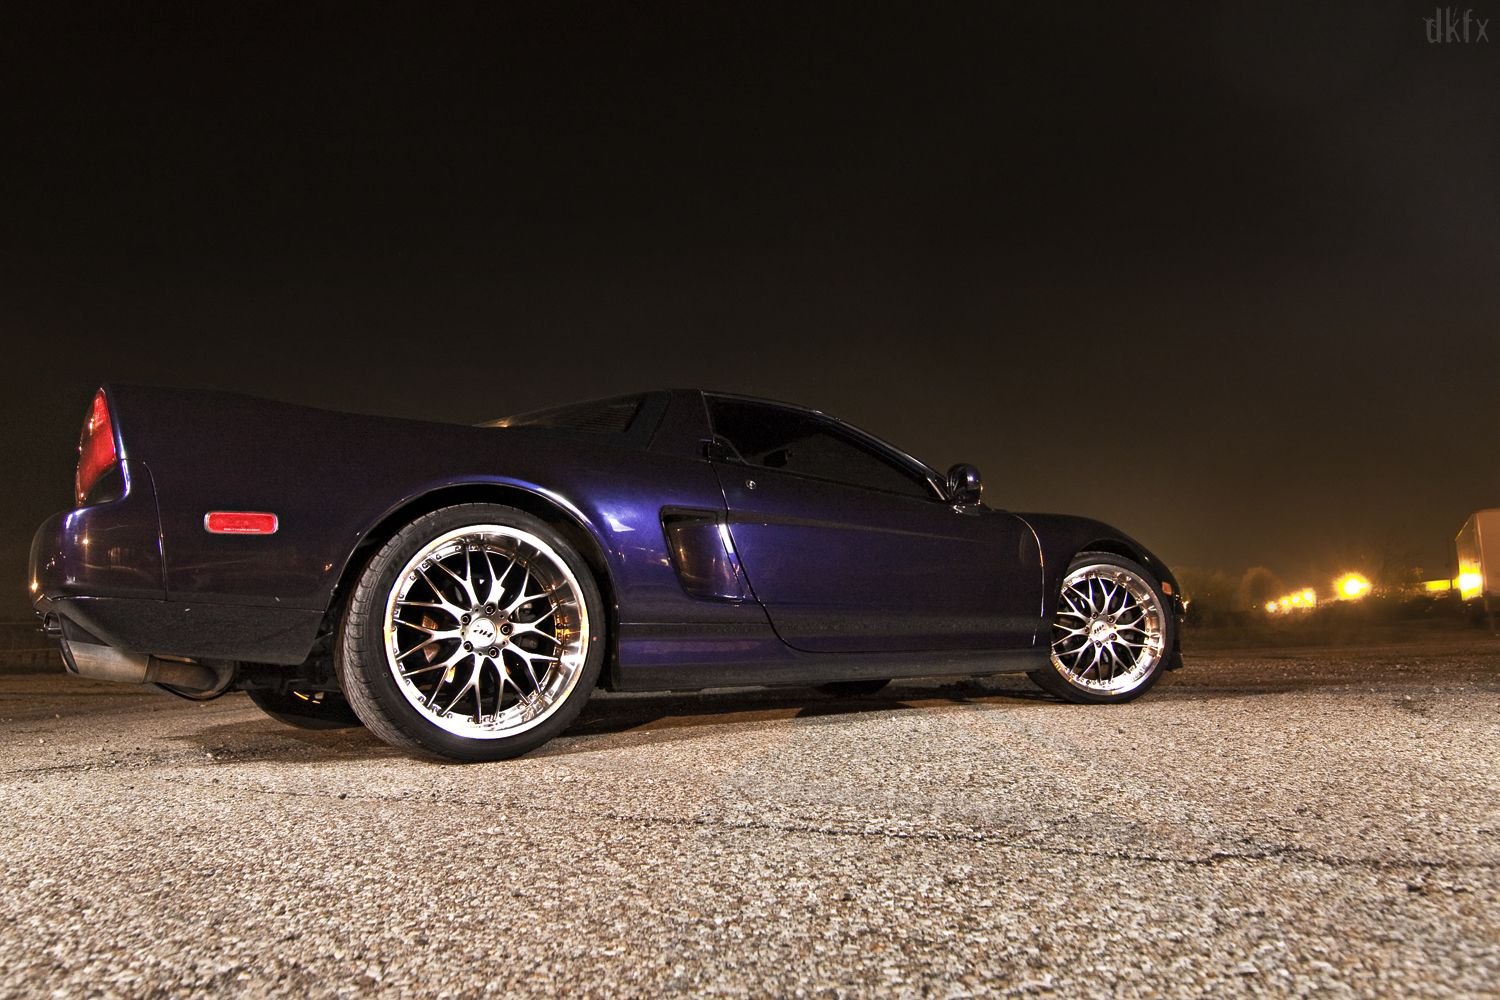 Custom Chrome Wheels on Dark Blue Acura NSX - Photo by dan kinzie